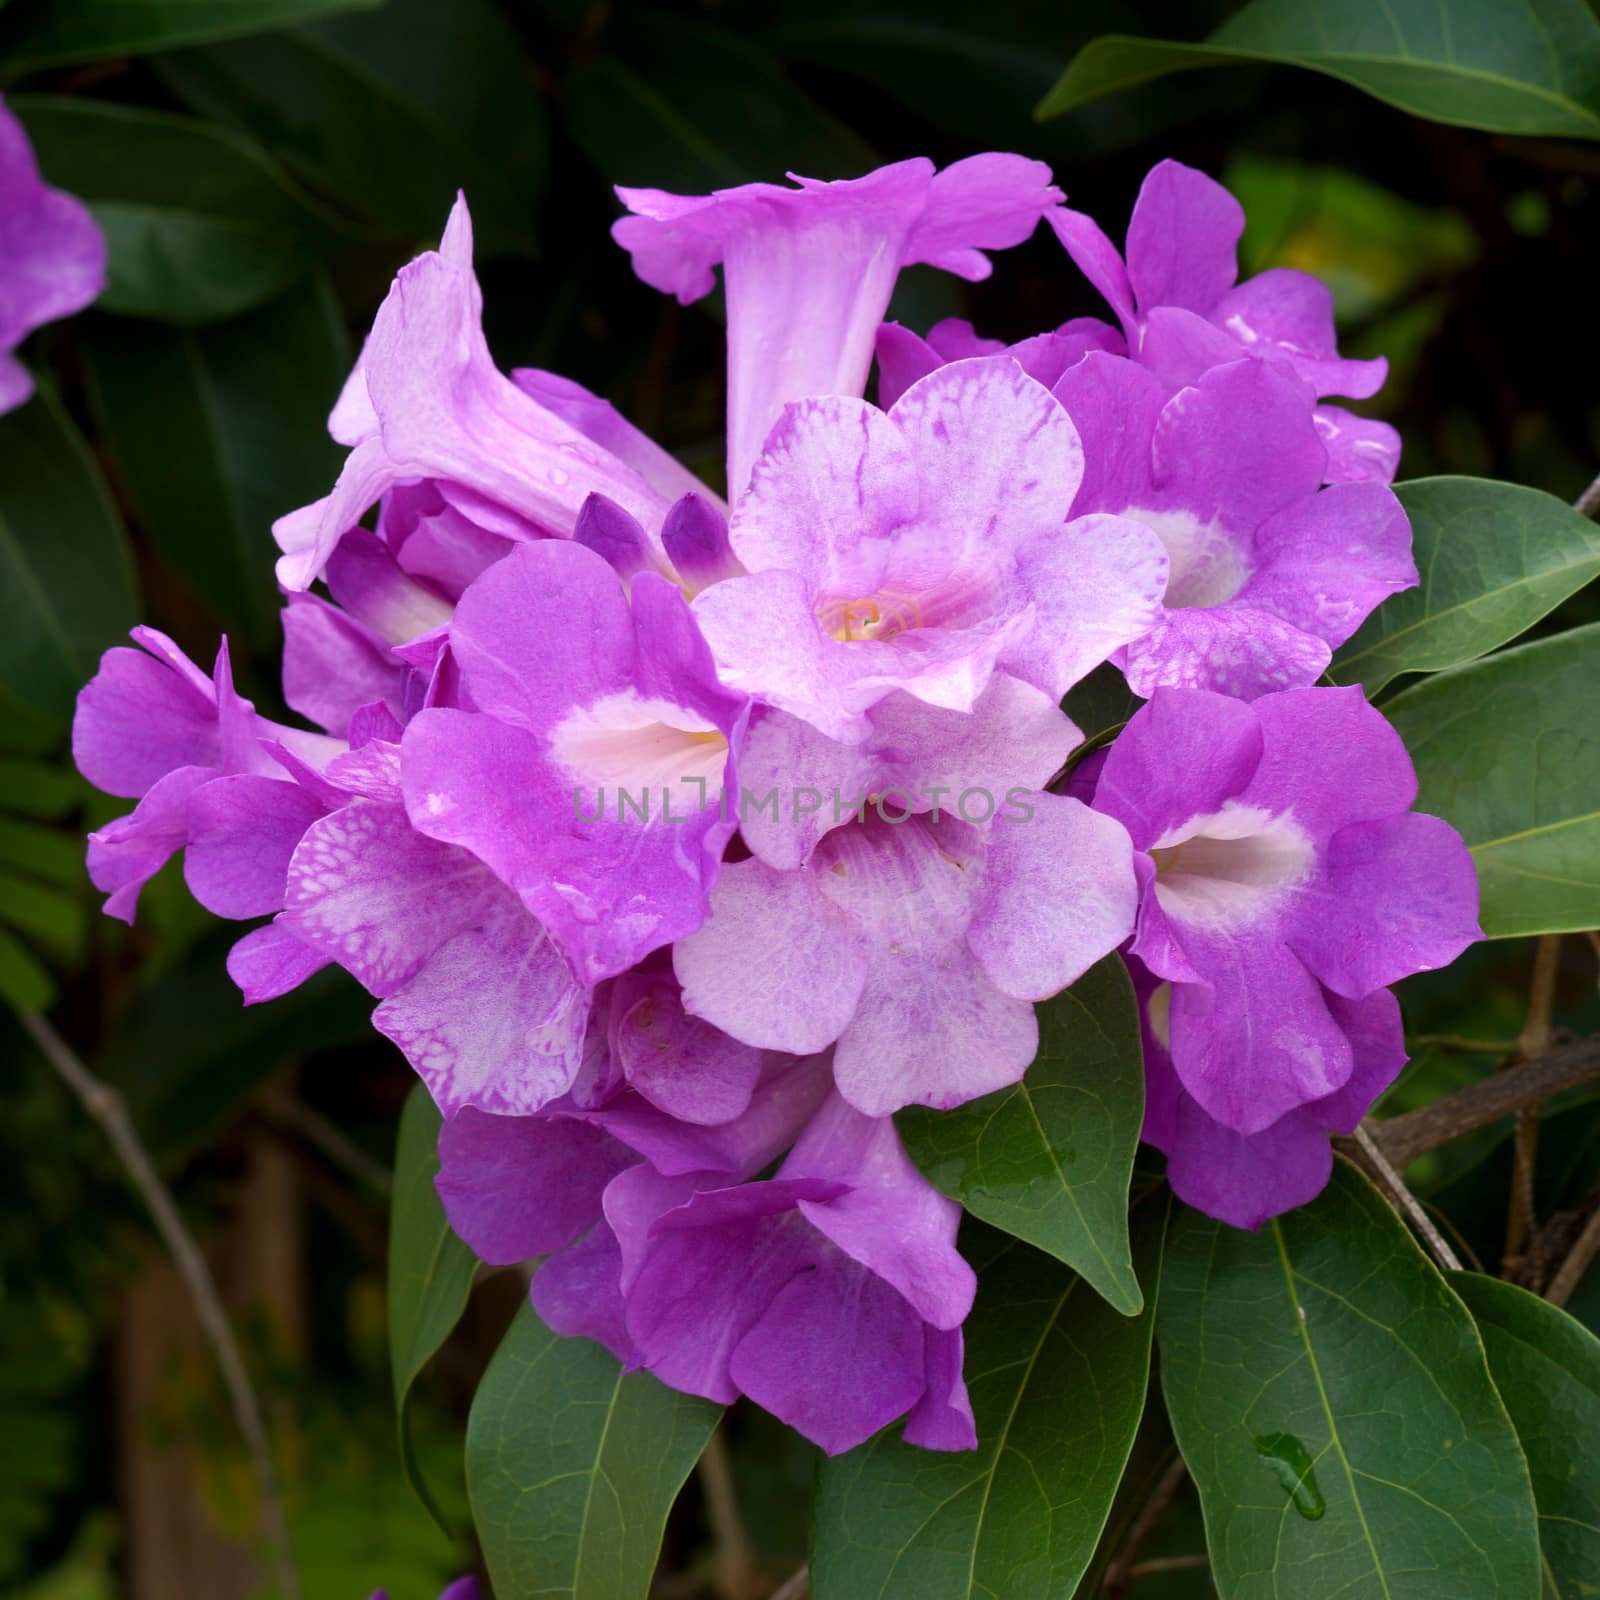 Ivy purple flowers by Noppharat_th